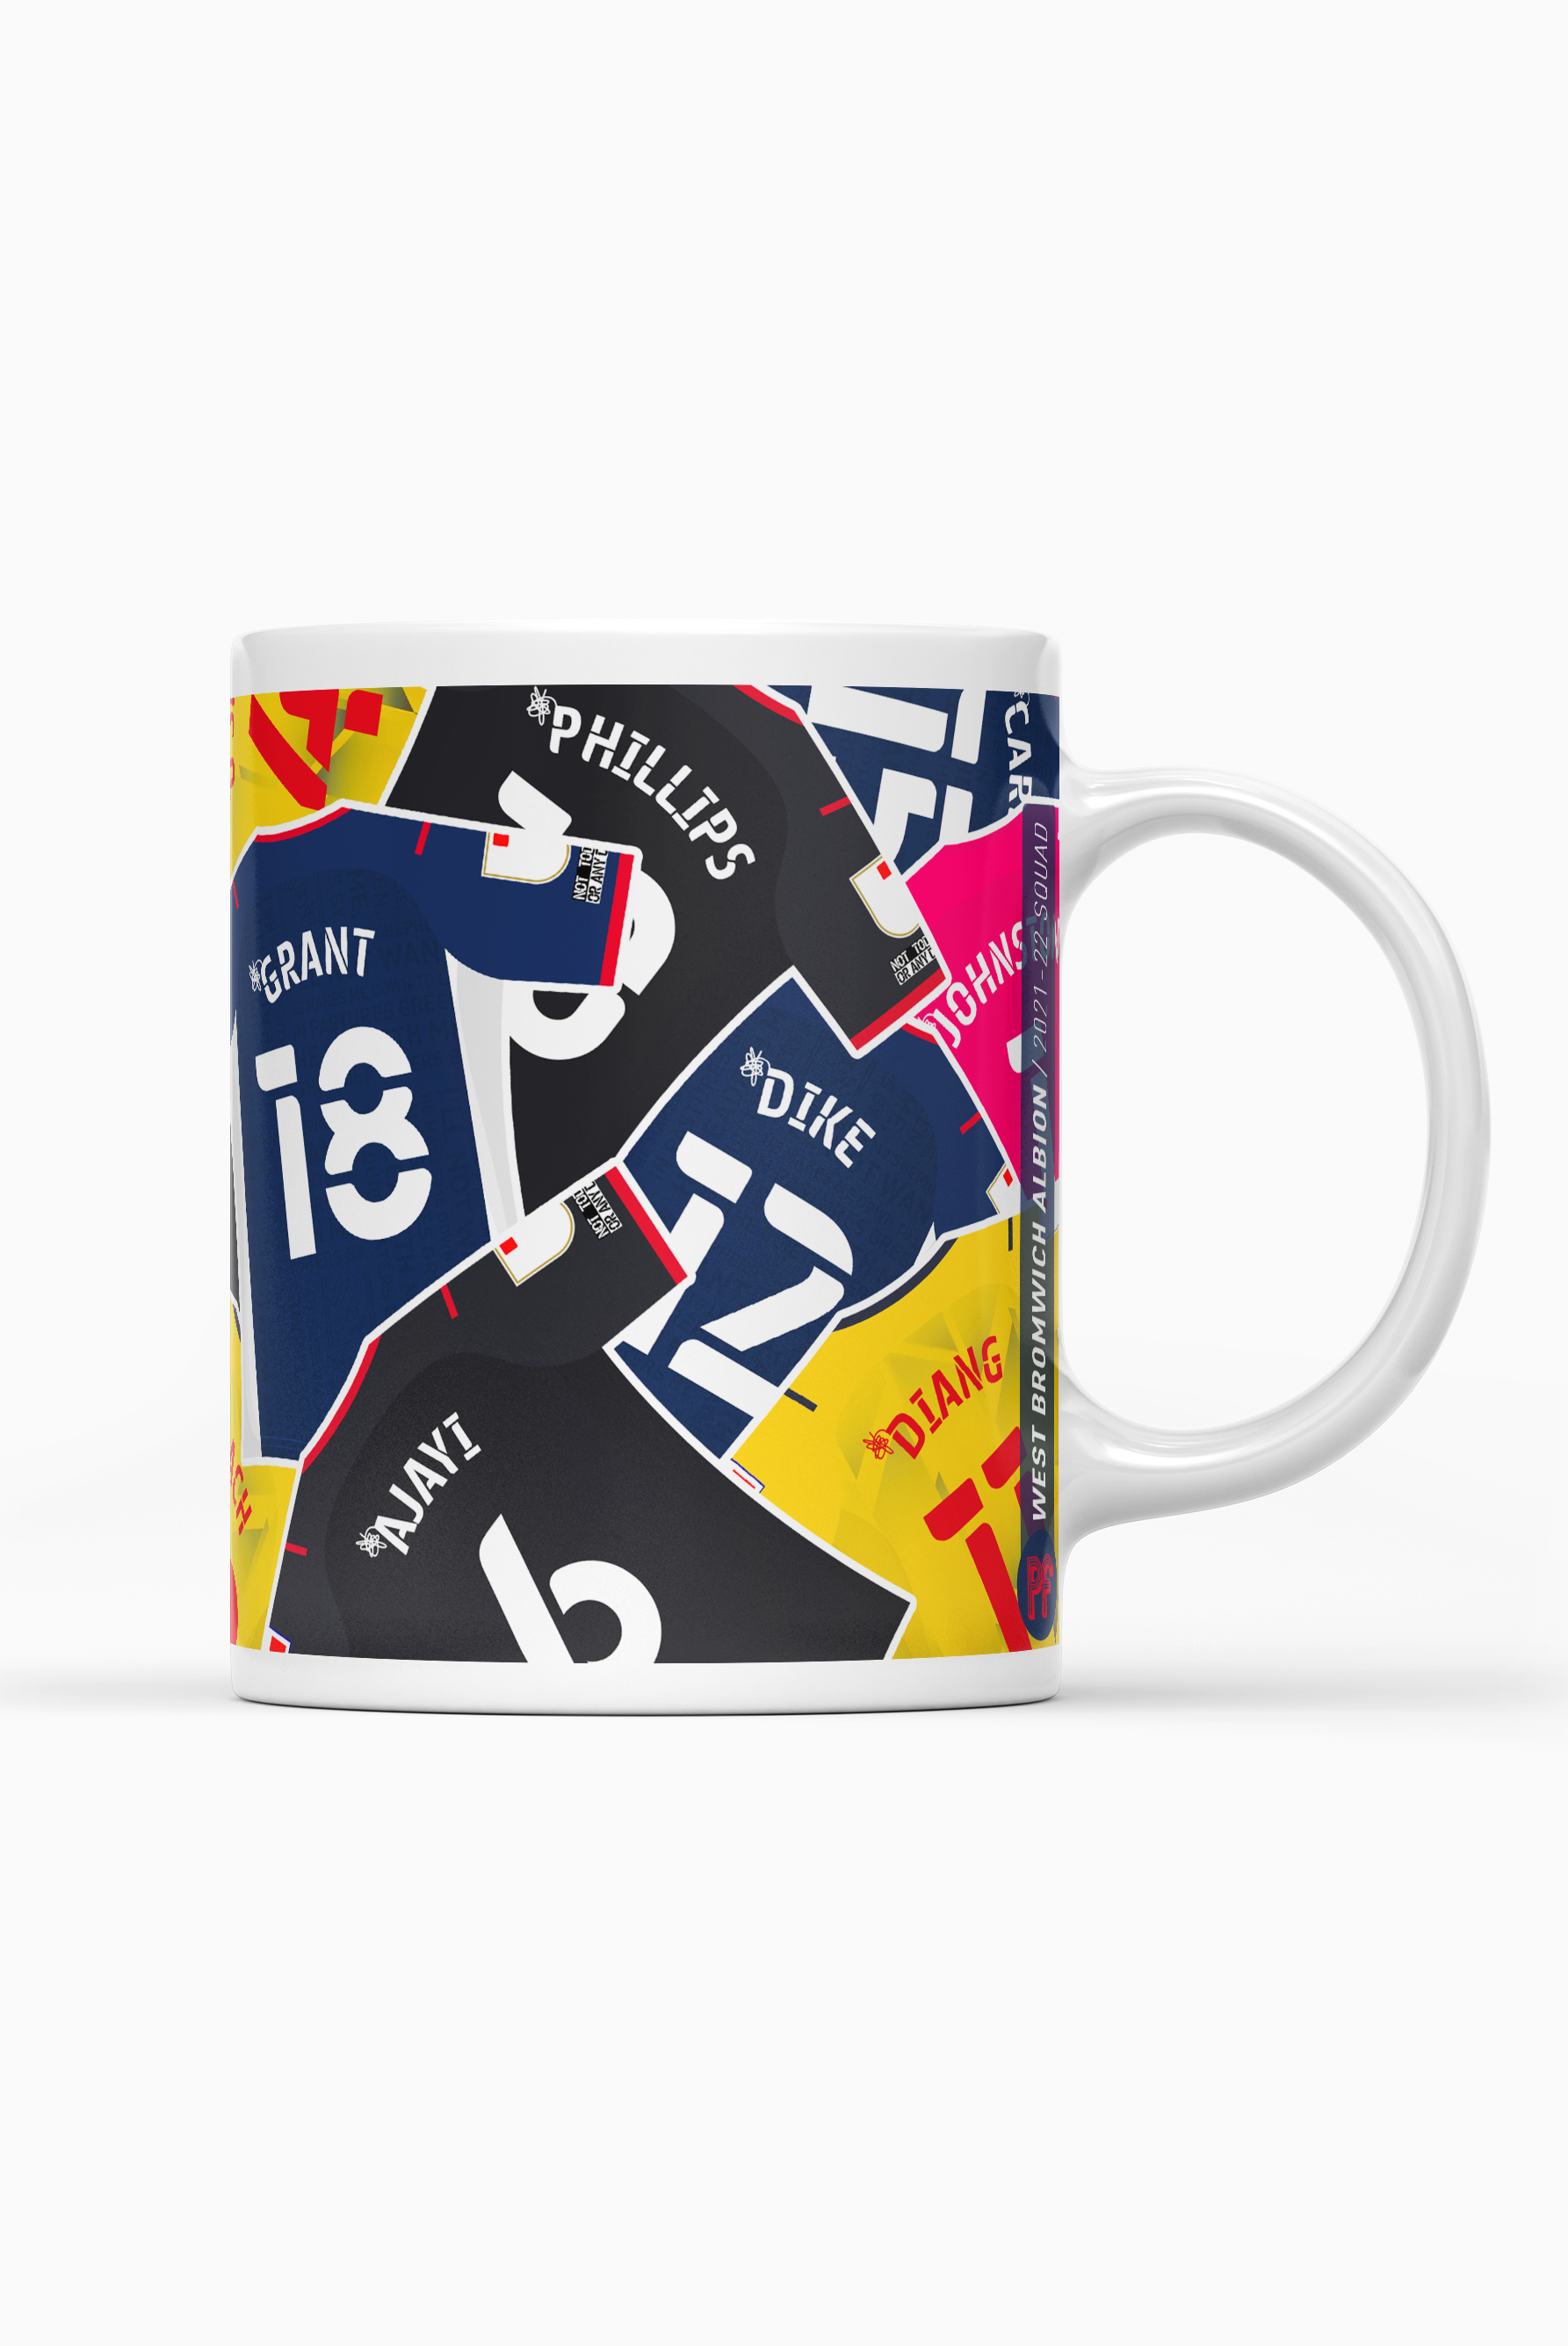 West Brom / 2021-22 Squad Mug